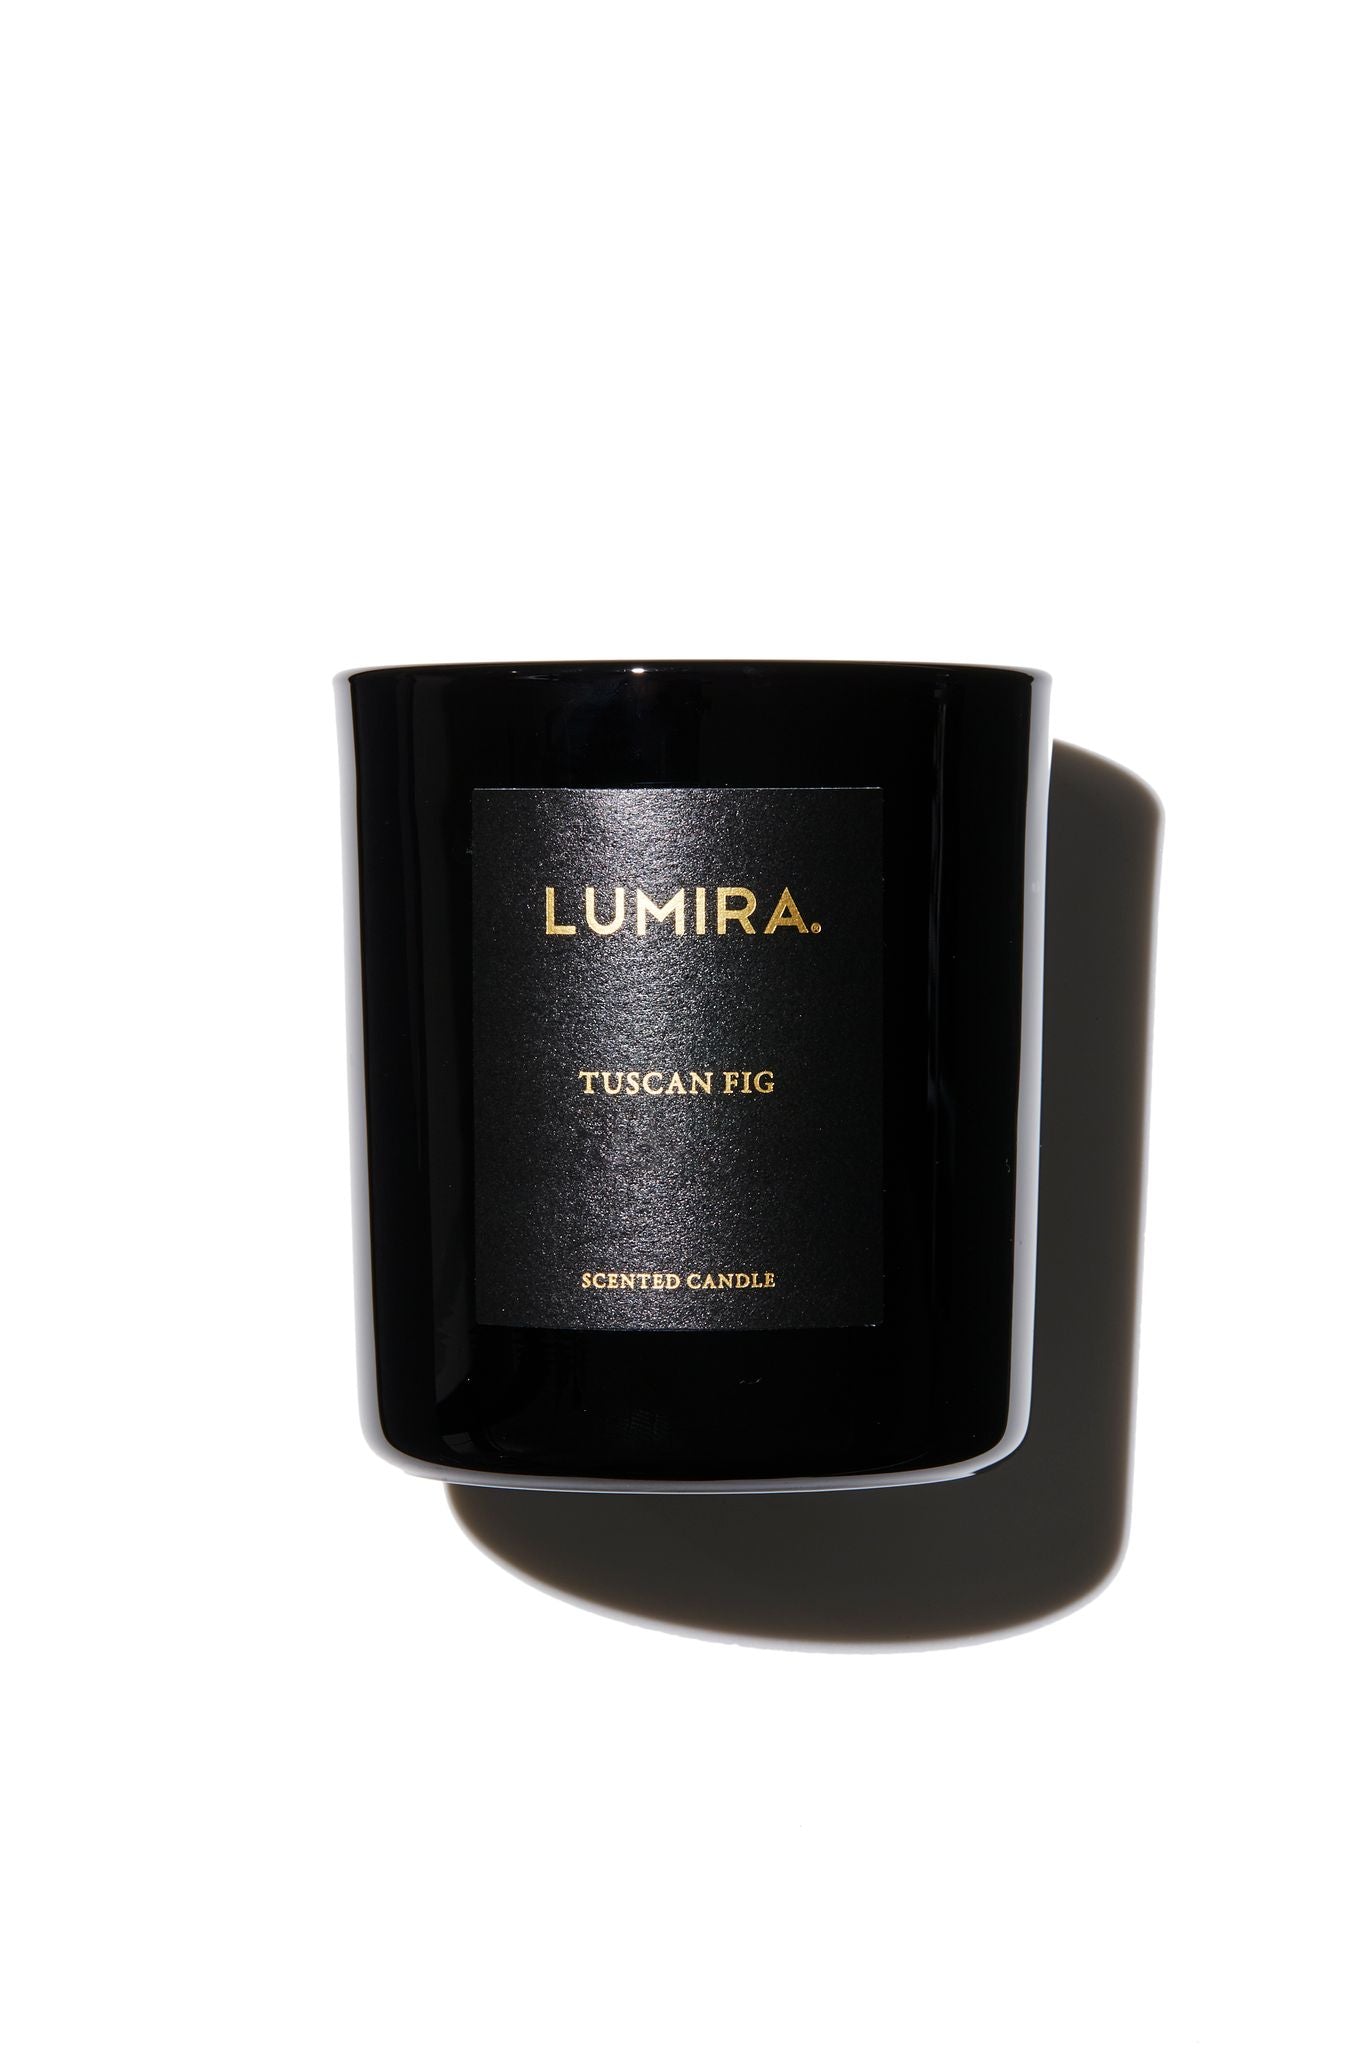 Lumira Candle in Tuscan Fig